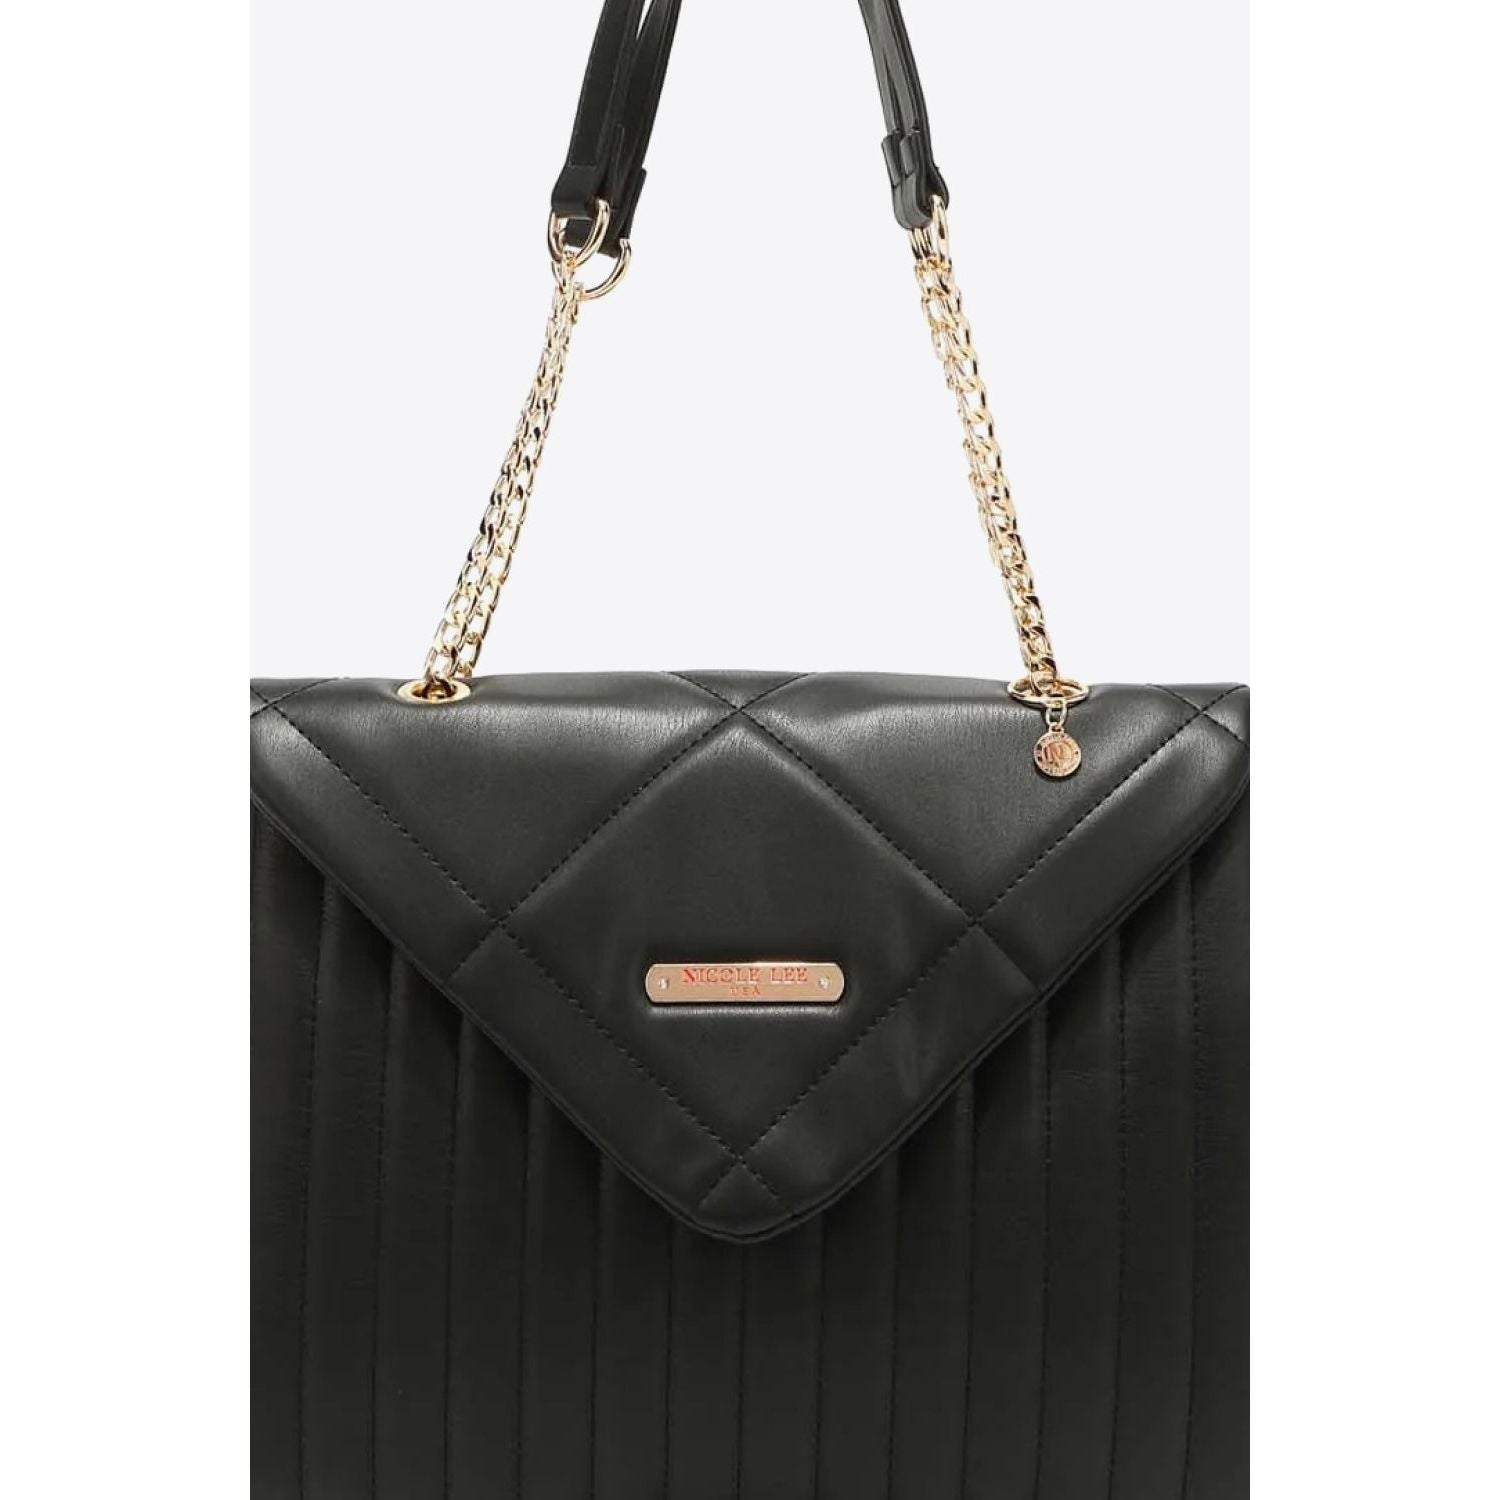 Nicole Lee USA A Nice Touch Handbag - TiffanyzKlozet